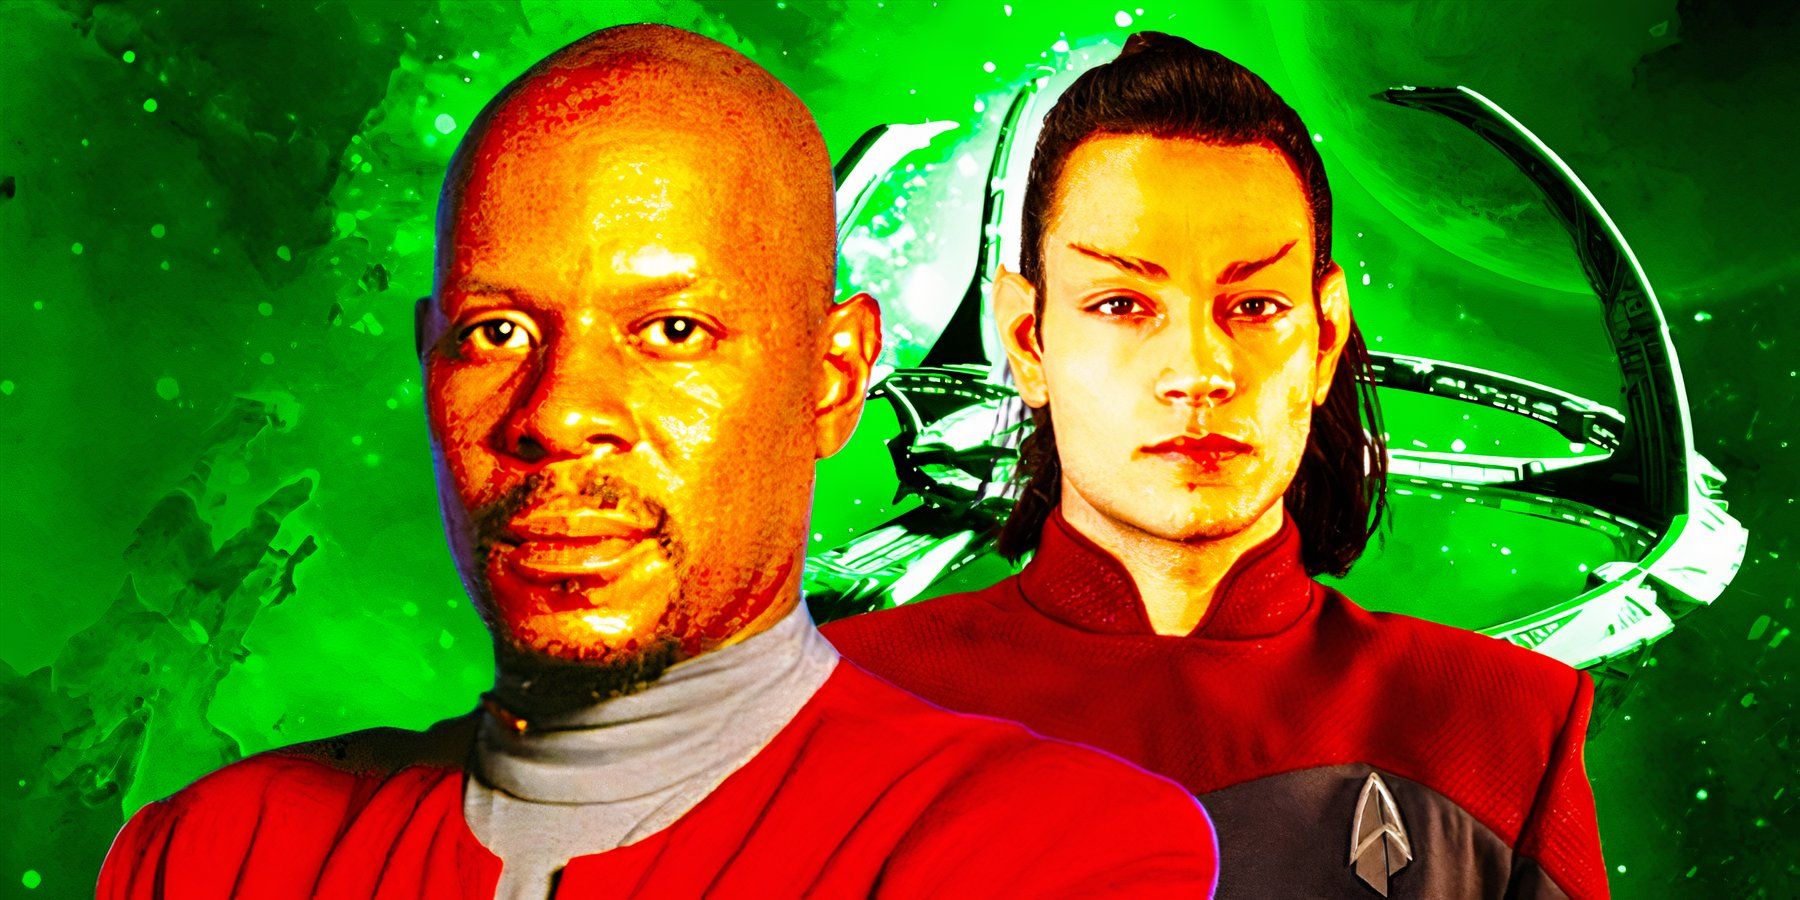 Avery Brooks as Captain Sisko and Evan Evagora as Elnor from Star Trek